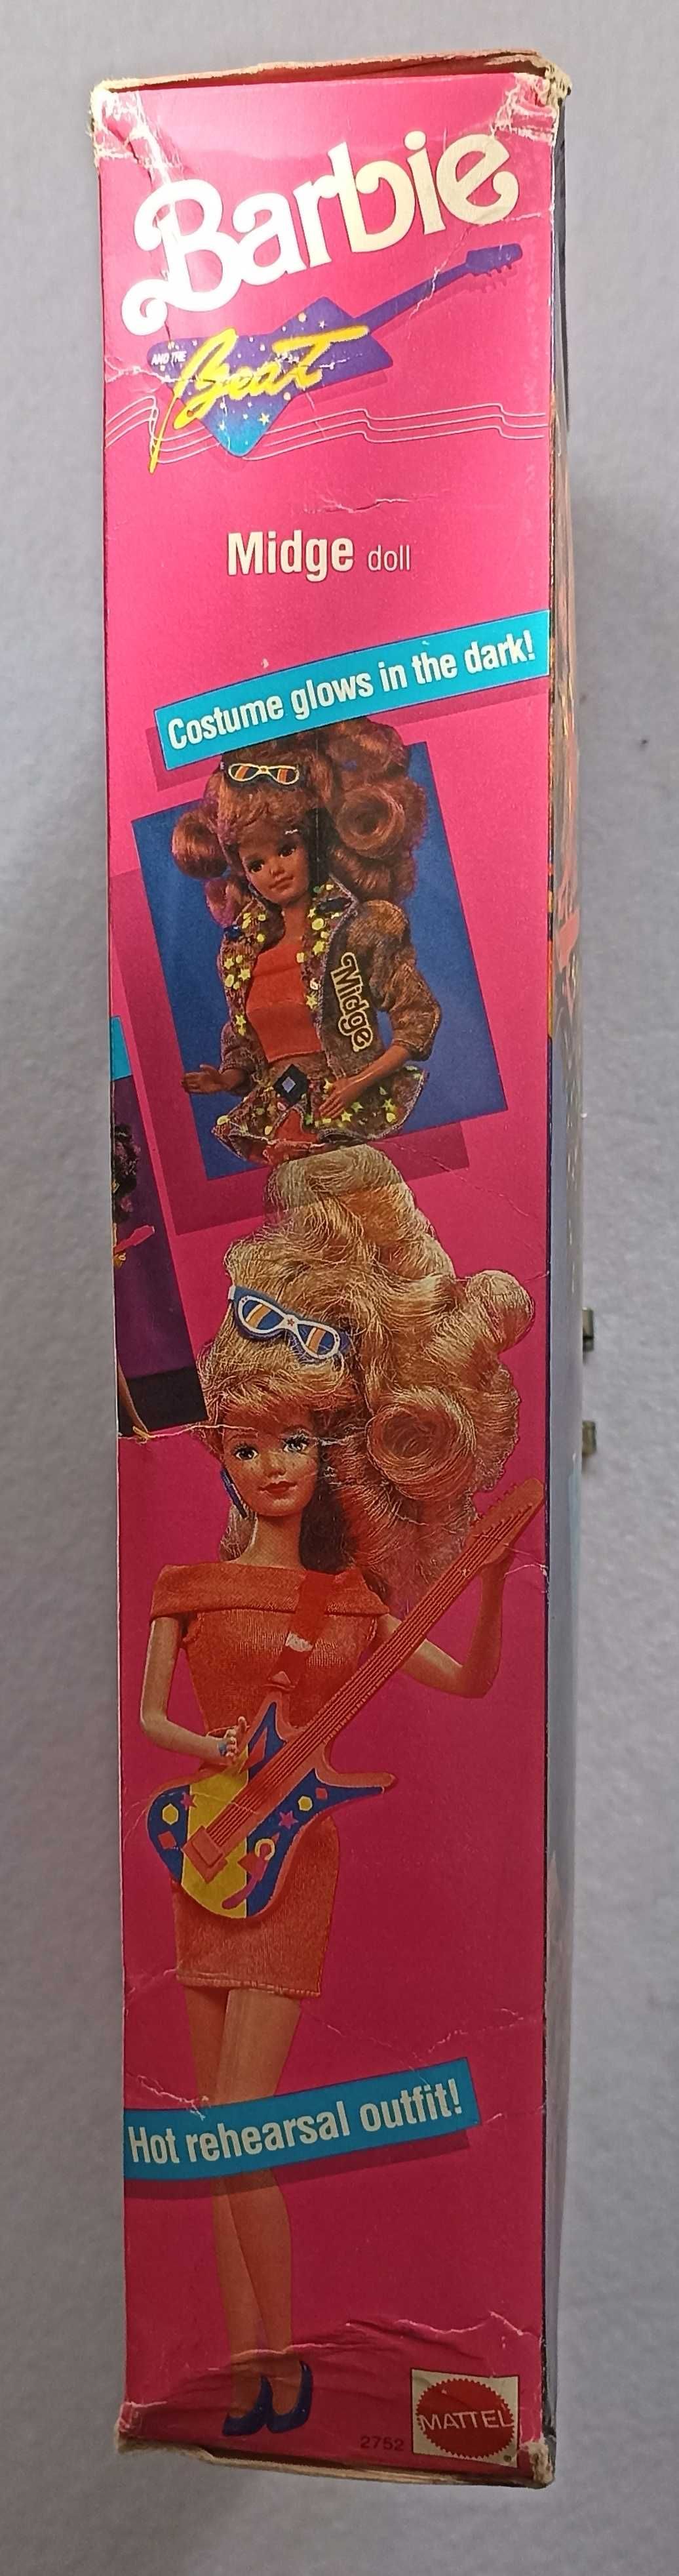 Barbie and The Beat DIsco Midge doll